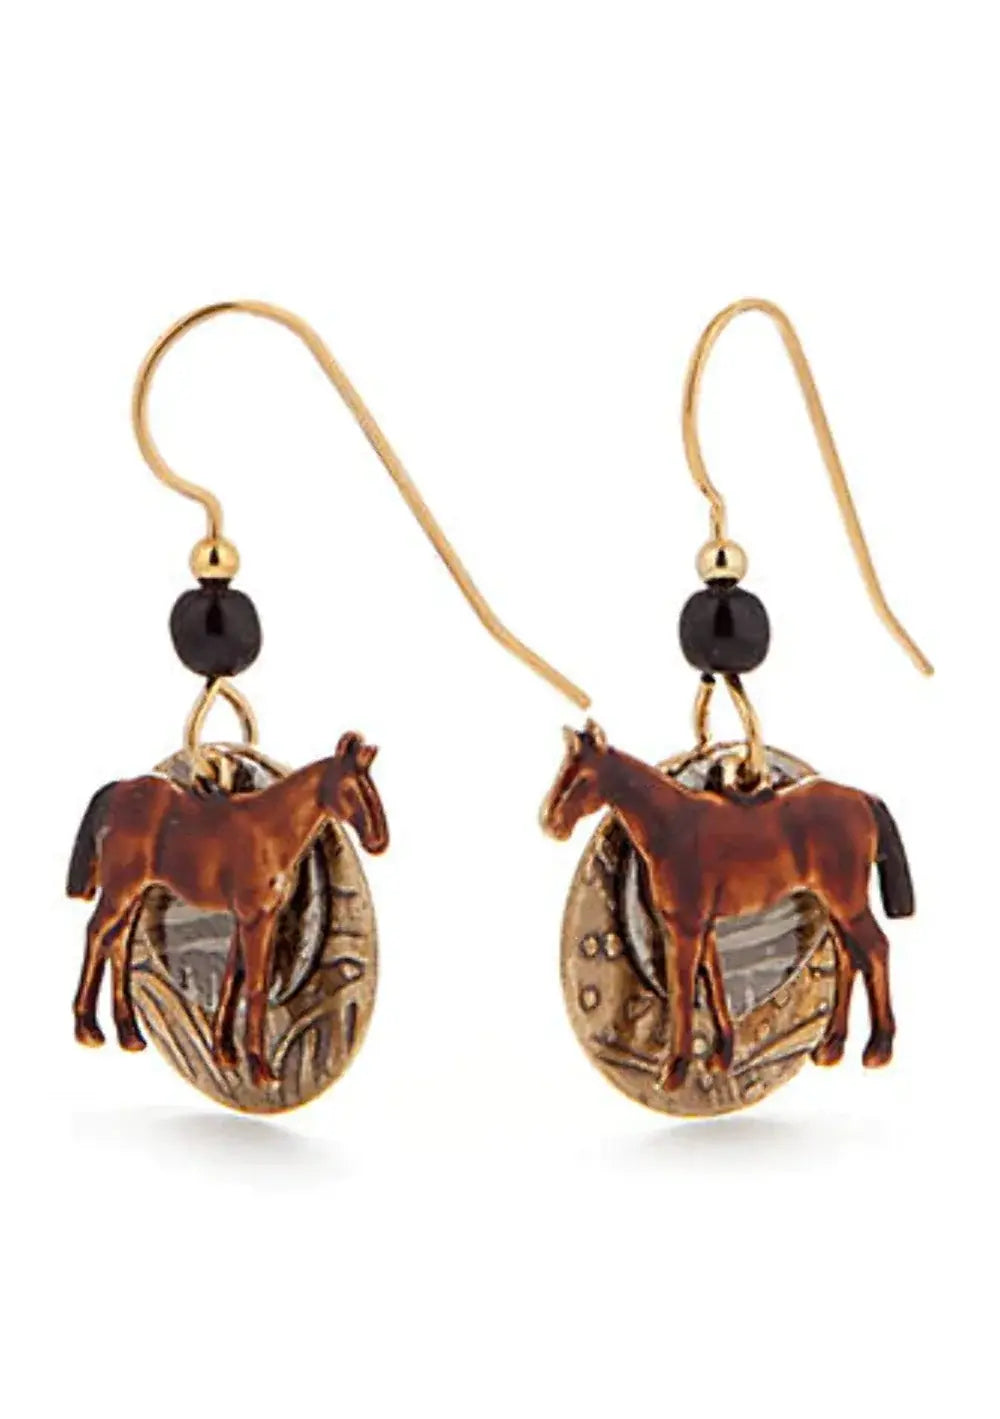 Silver Forest Horse Earrings